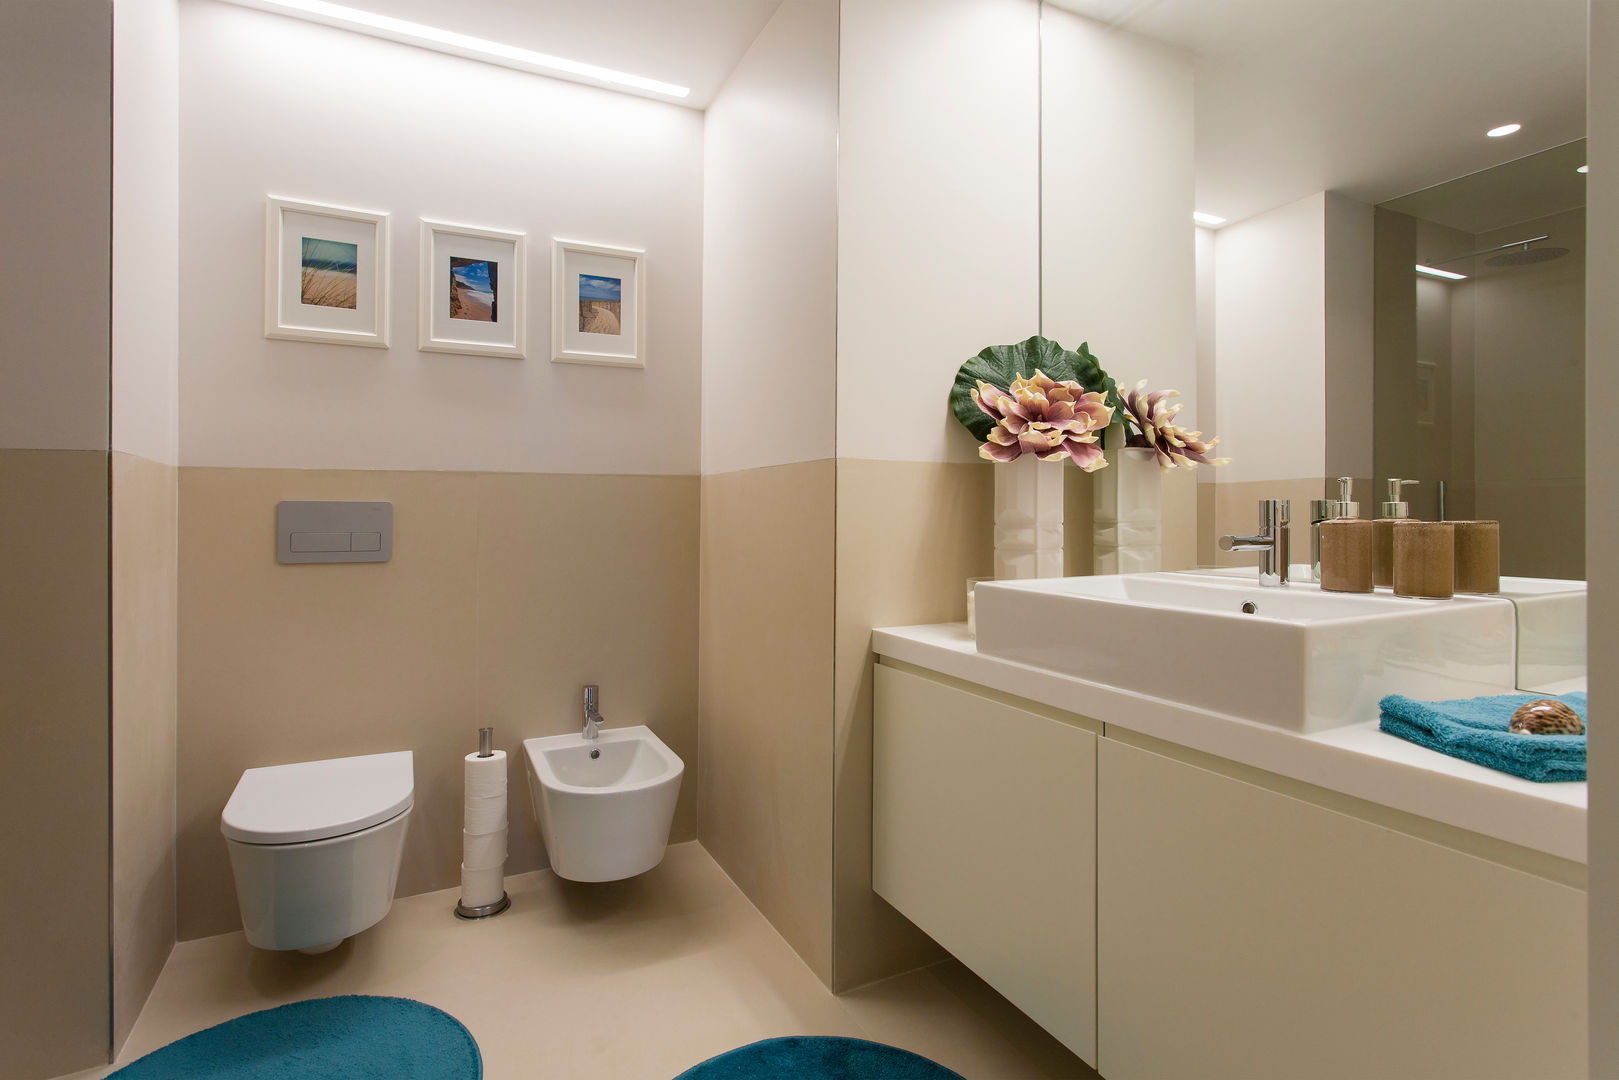 Andar Modelo - Oeiras, Traço Magenta - Design de Interiores Traço Magenta - Design de Interiores Salle de bain moderne